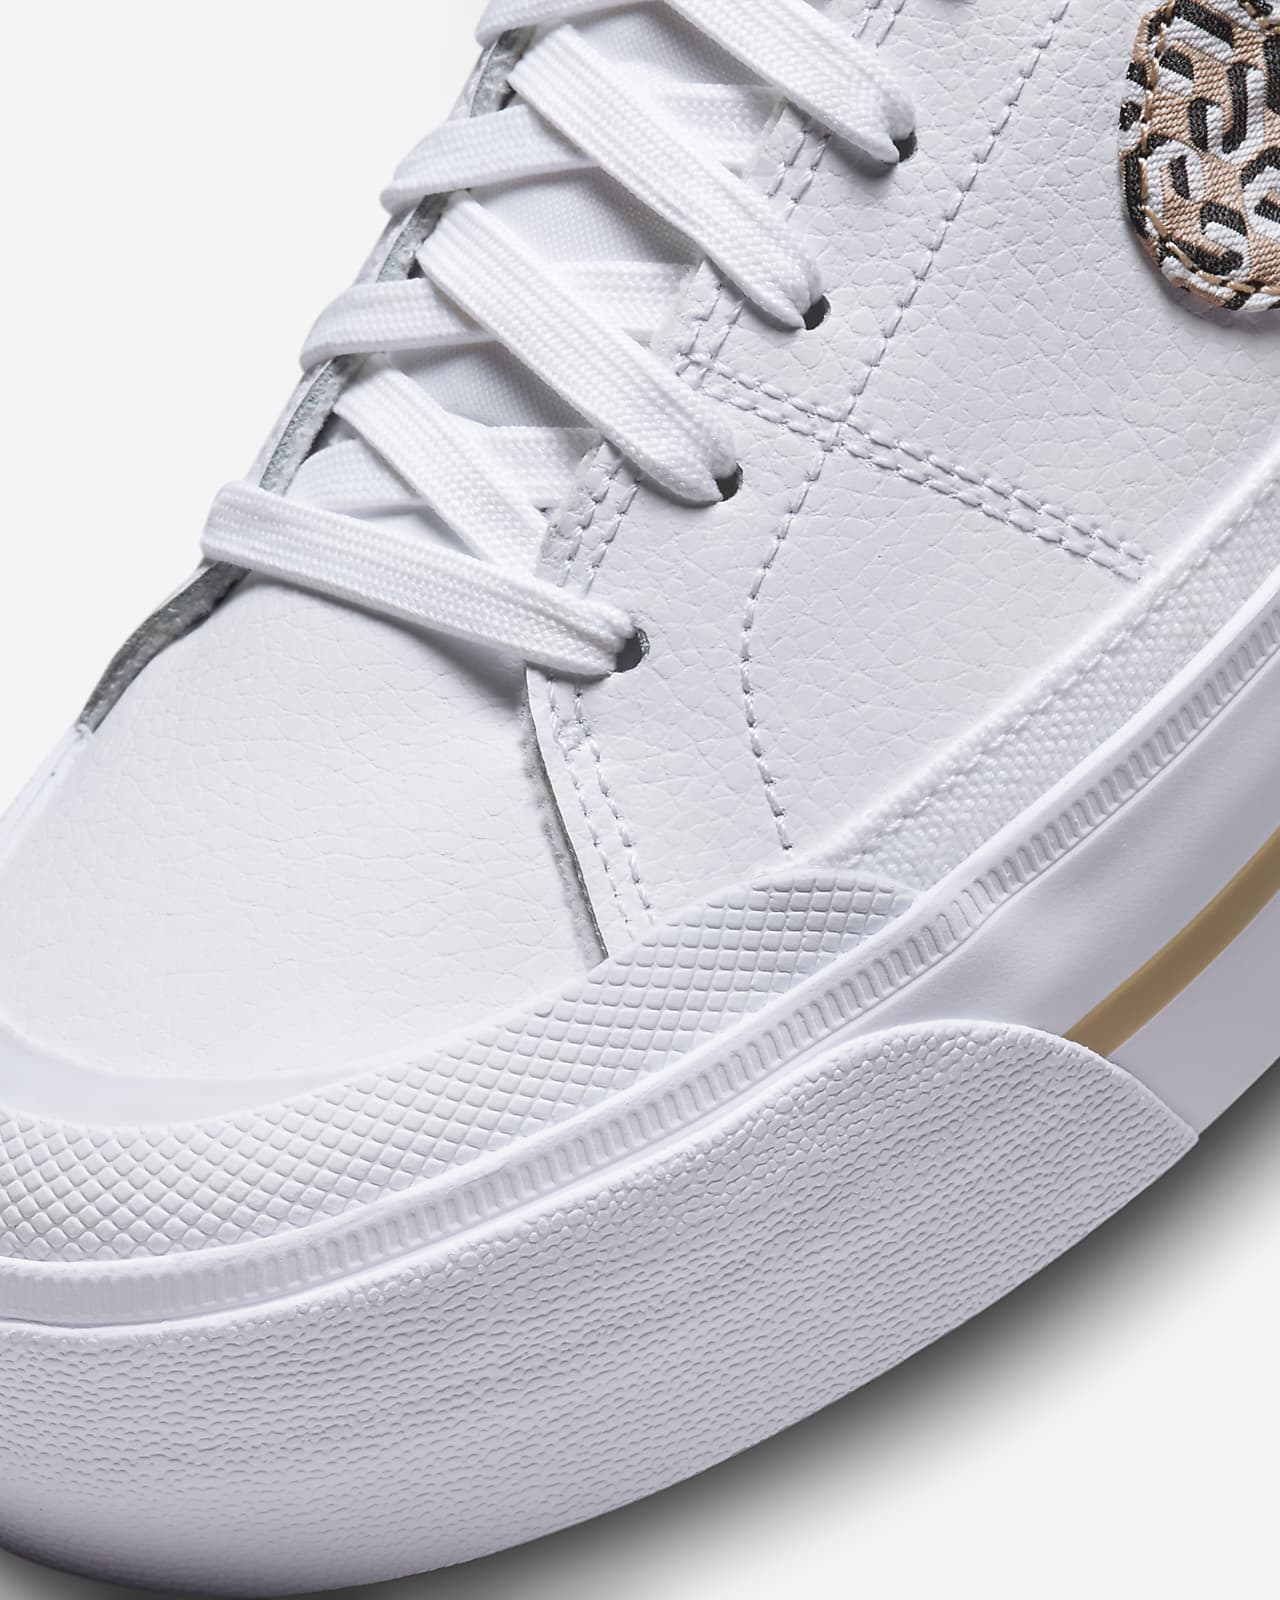 Nike Air Max 97 White Snakeskin On-Feet